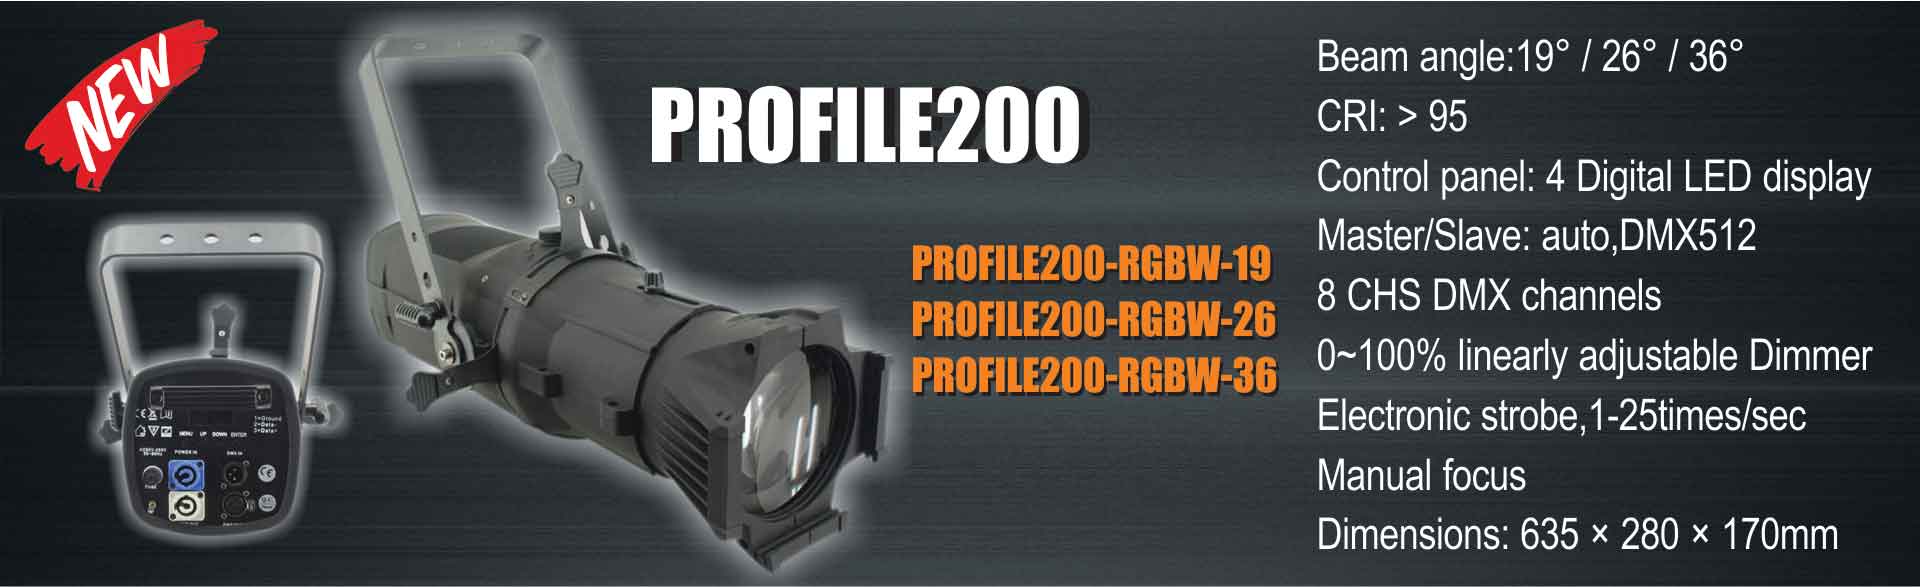 
Profile200.jpg